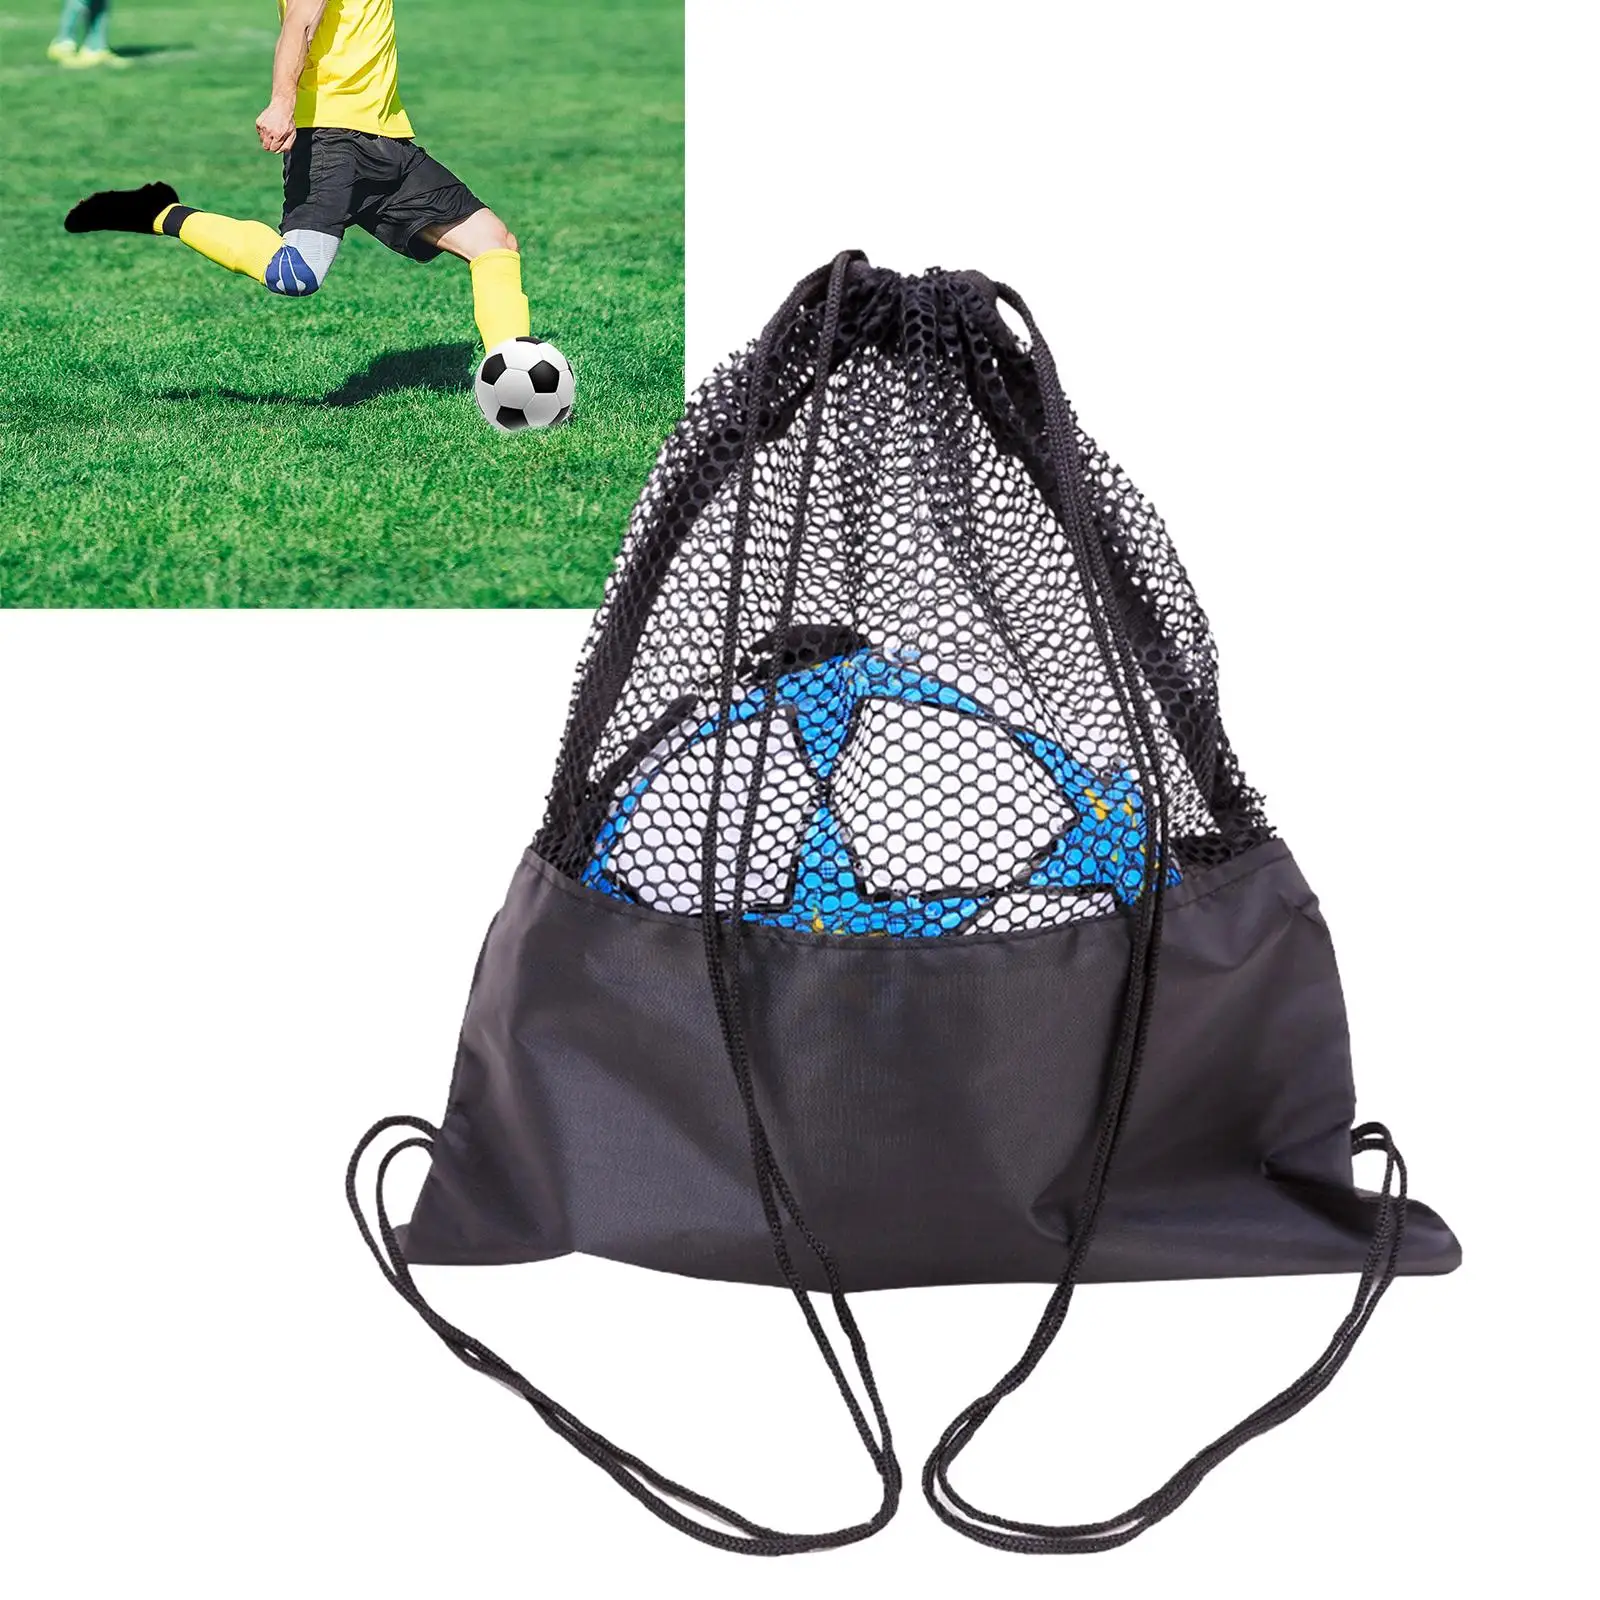 Drawstring Backpack Day Pack Handbag Gym Wear Resistant Basketball Mesh Bag for Football Rugby Softball Traveling Soccer